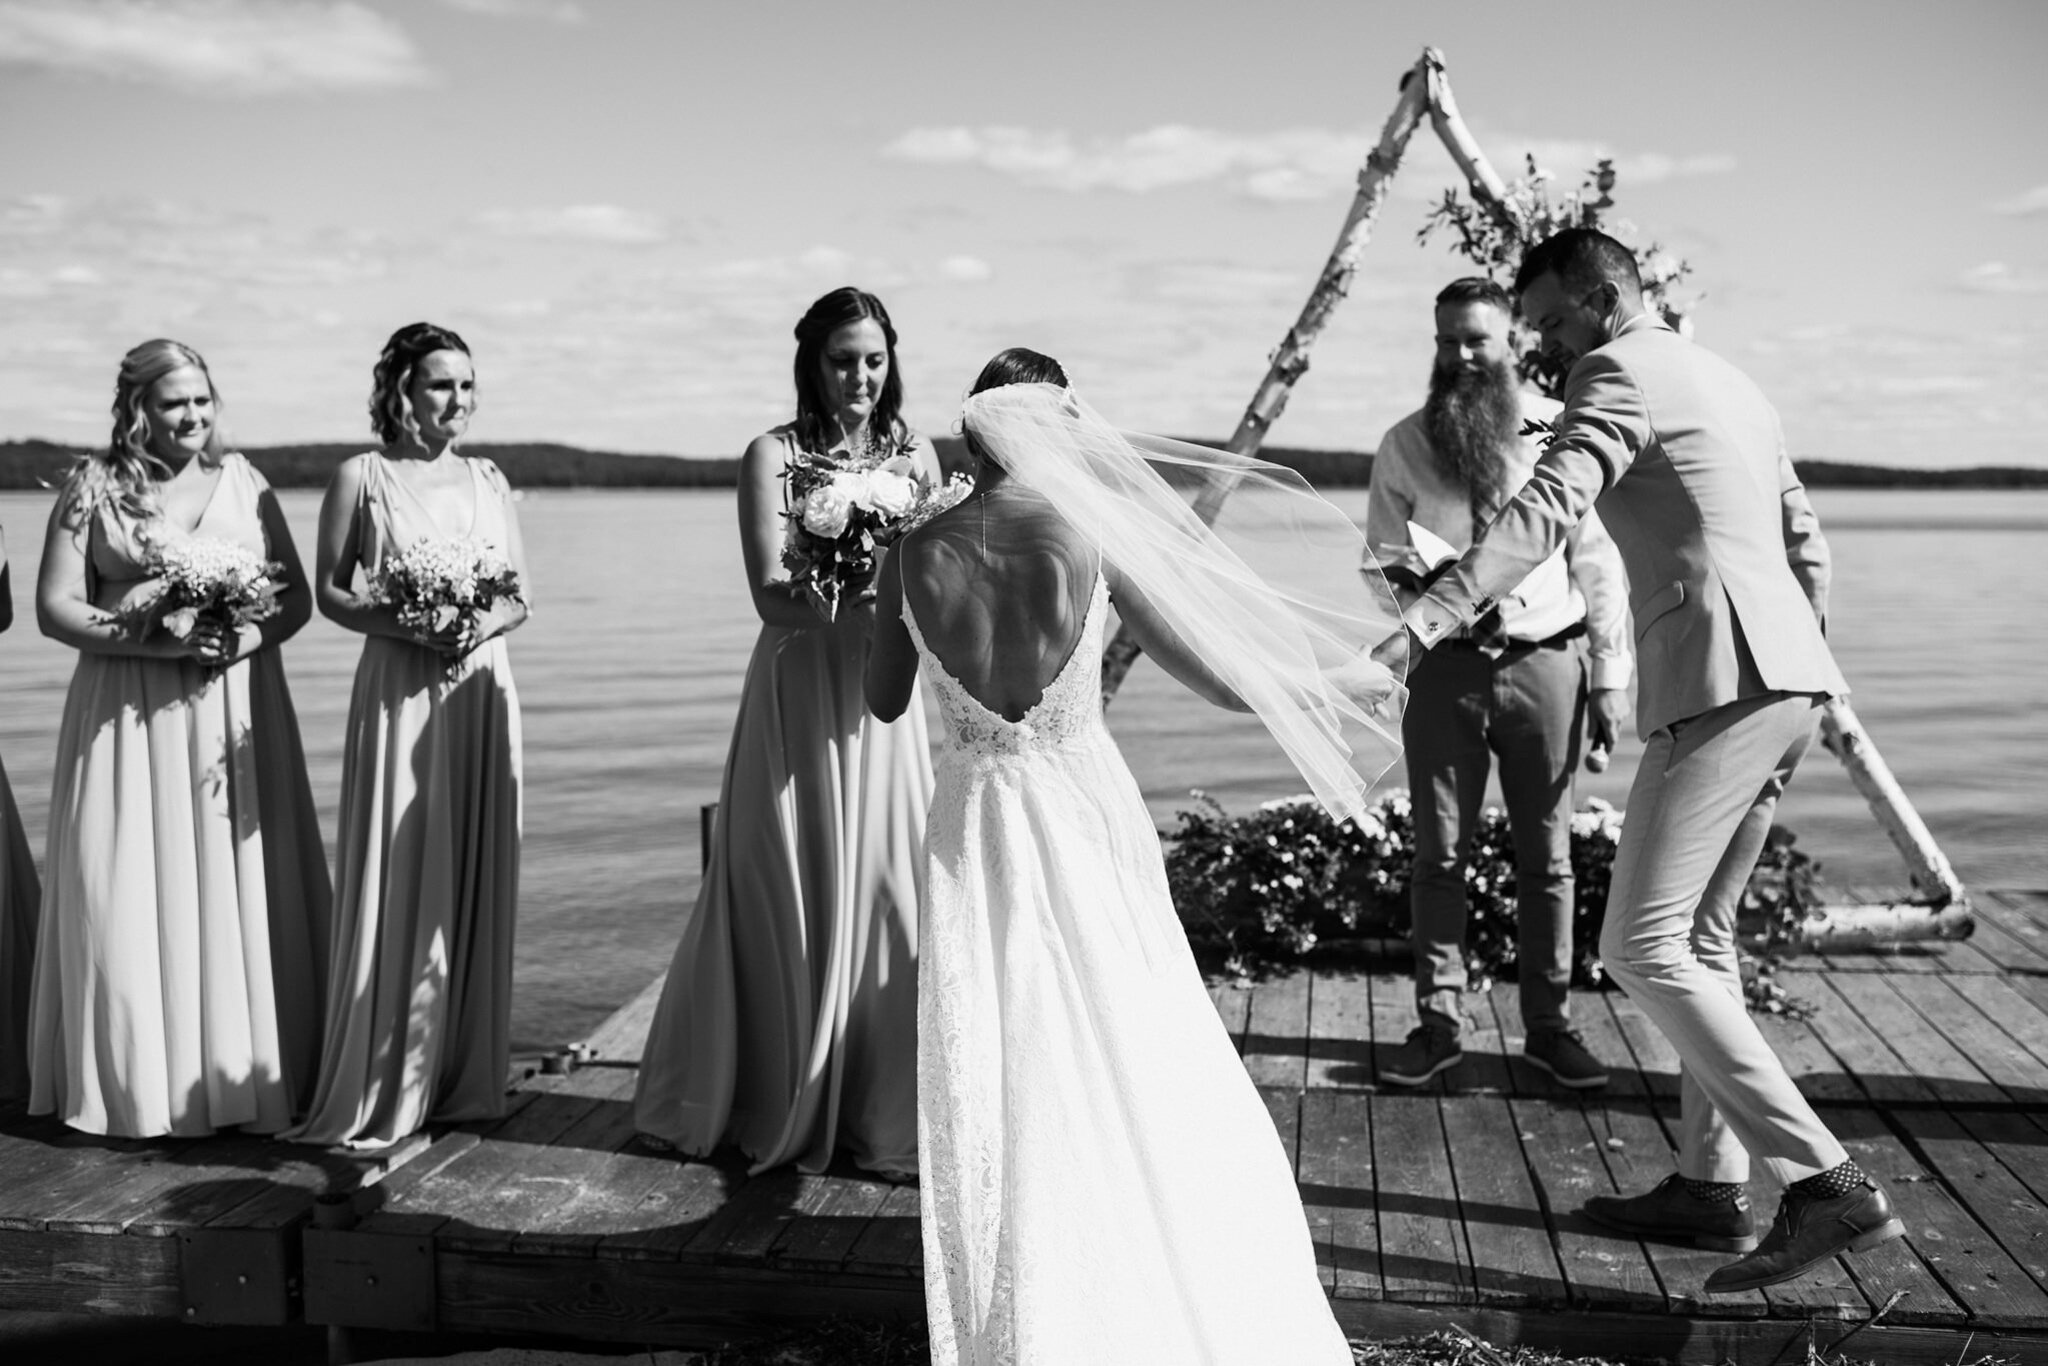 618-outdoor-wedding-ceremony-by-the-lake-sundridge.jpg